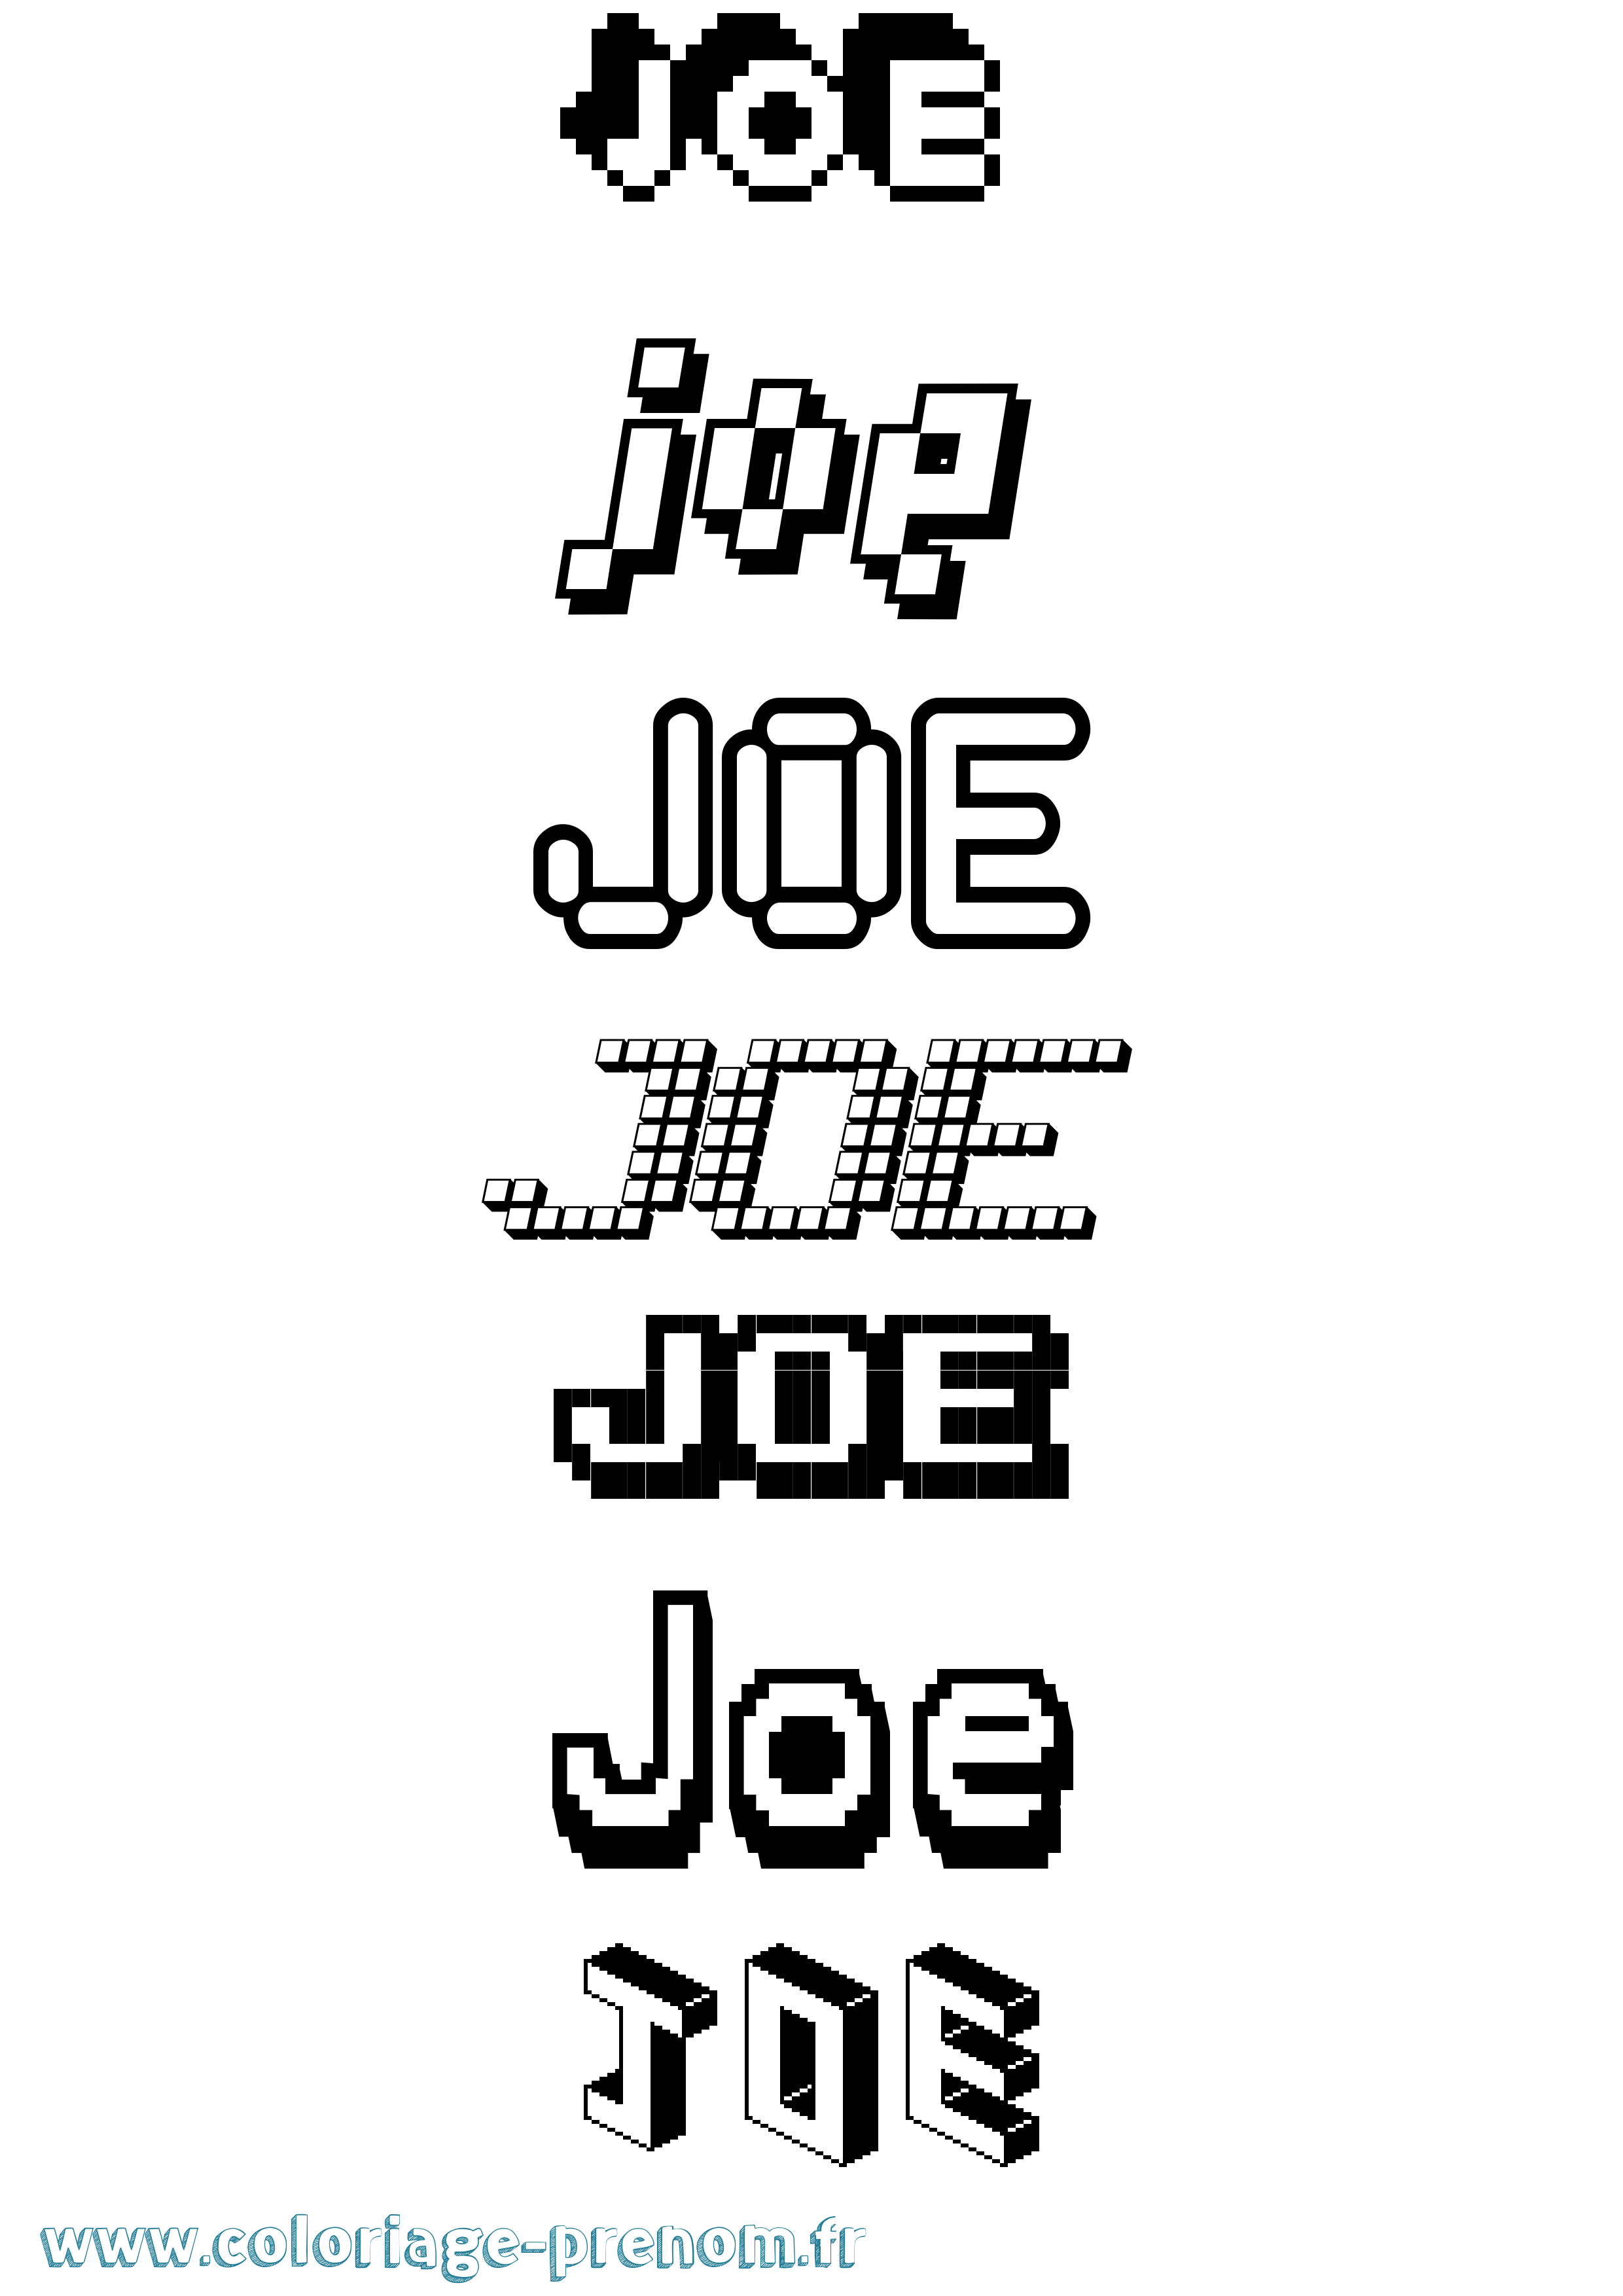 Coloriage prénom Joe Pixel